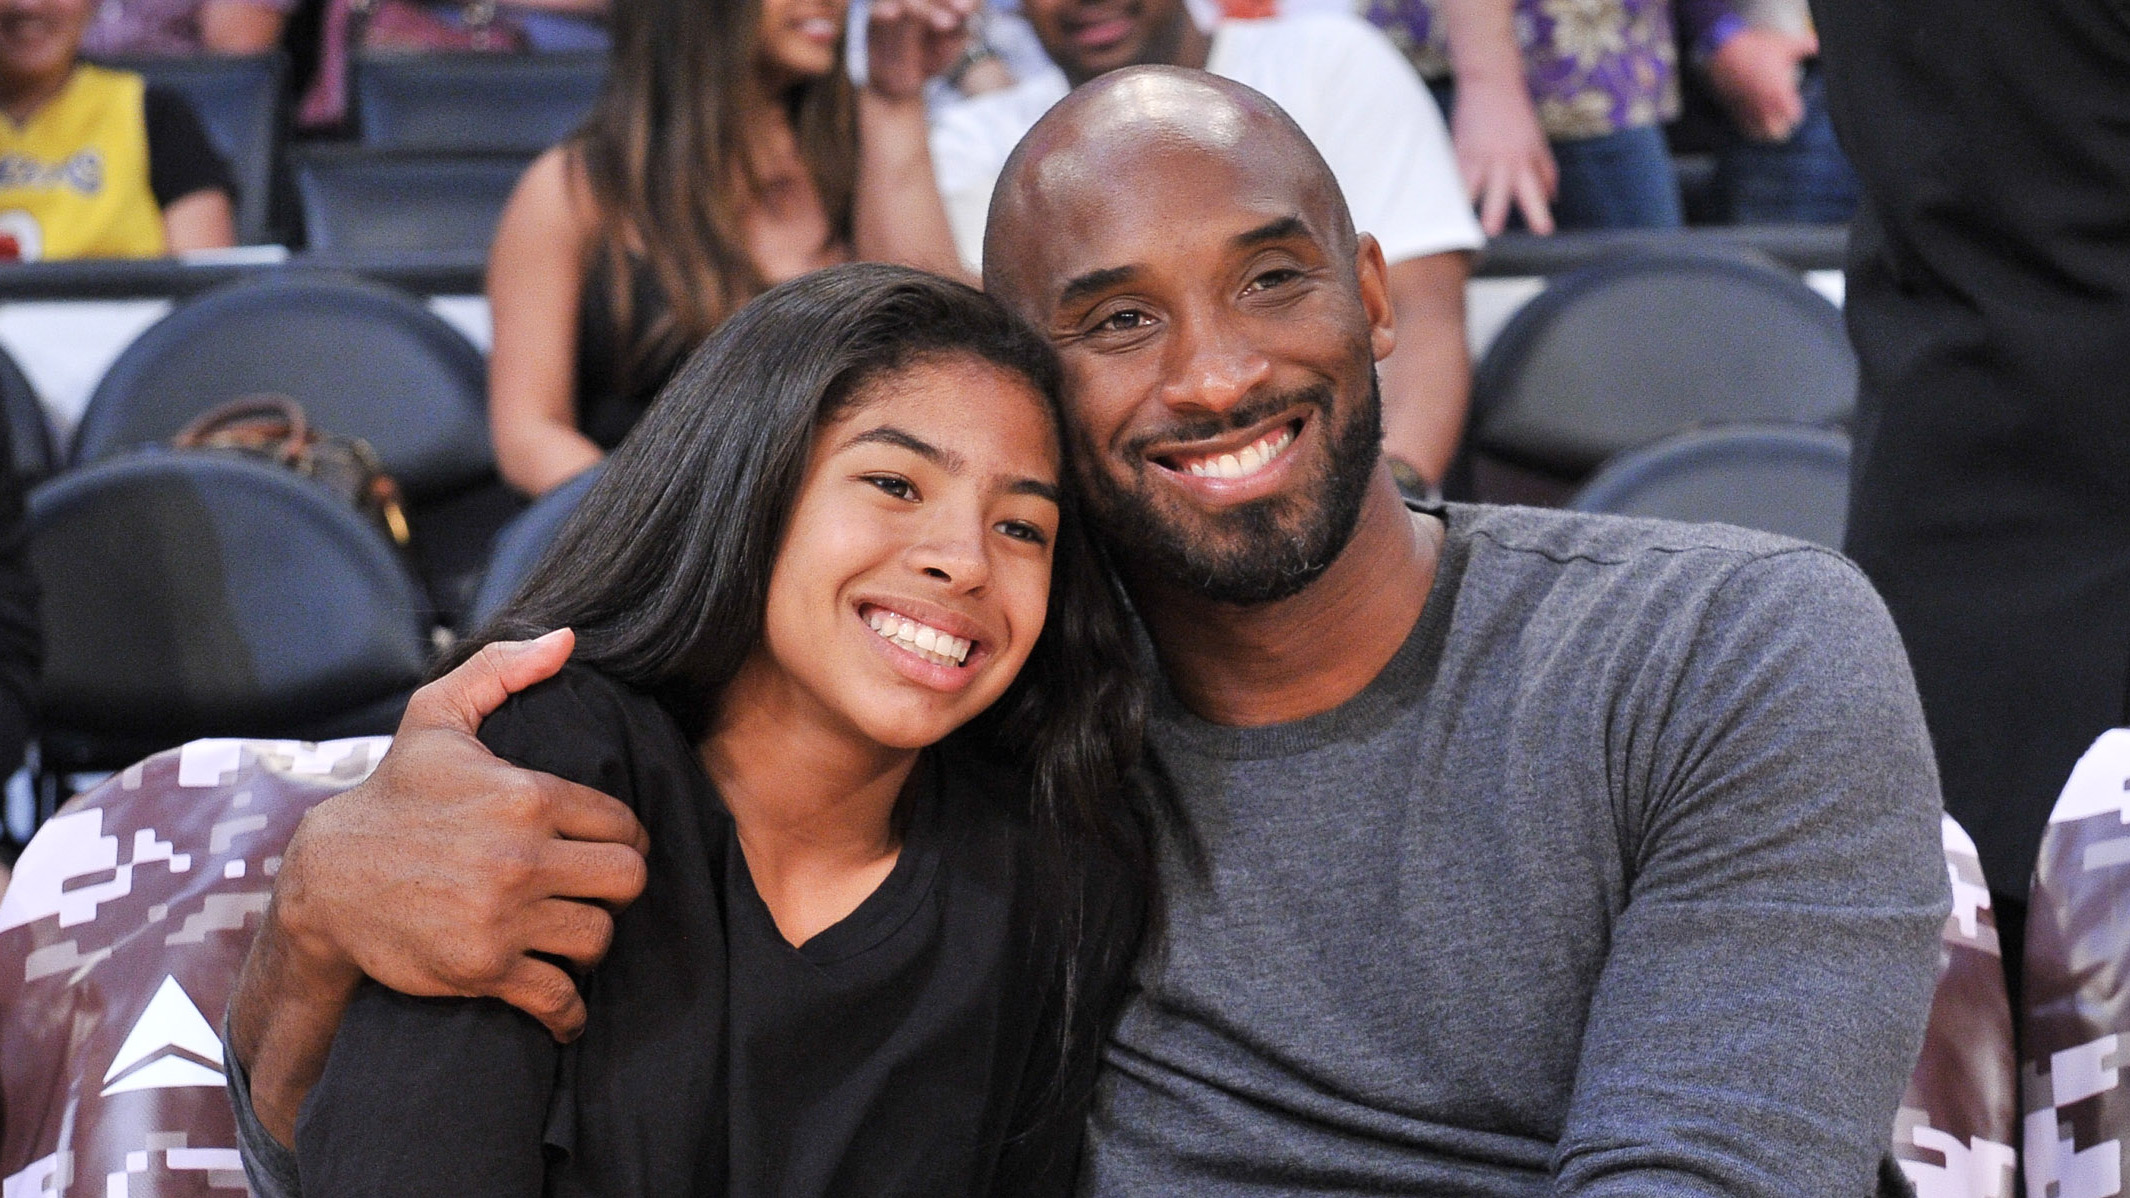 Girl Dad Kobe Bryant Los Angeles Lakers Basketball T-Shirt